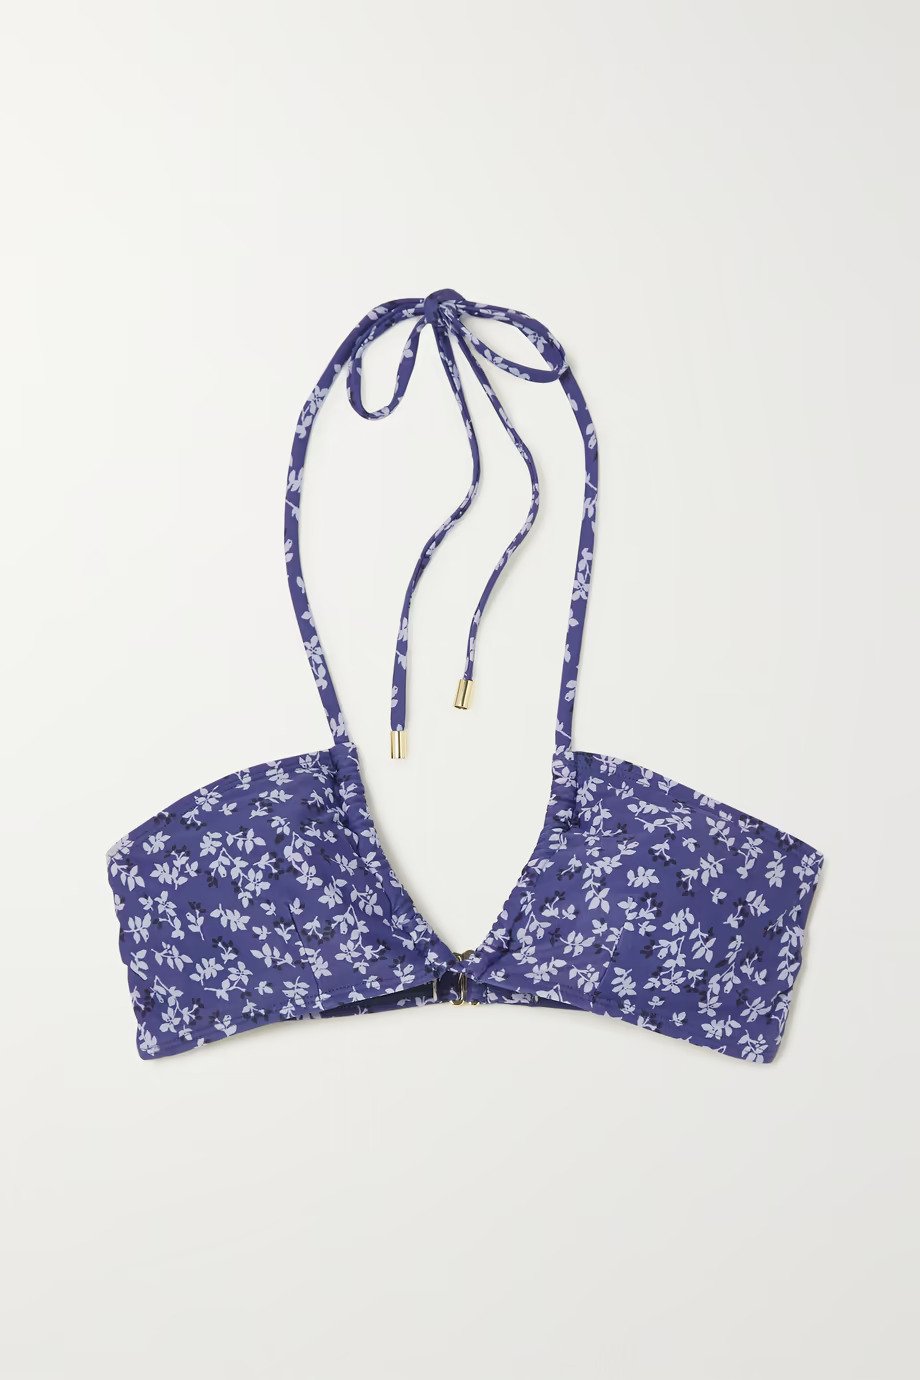 Peony + + Net Sustain Ruched Floral-Print Stretch-ECONYL Halterneck Bikini Top